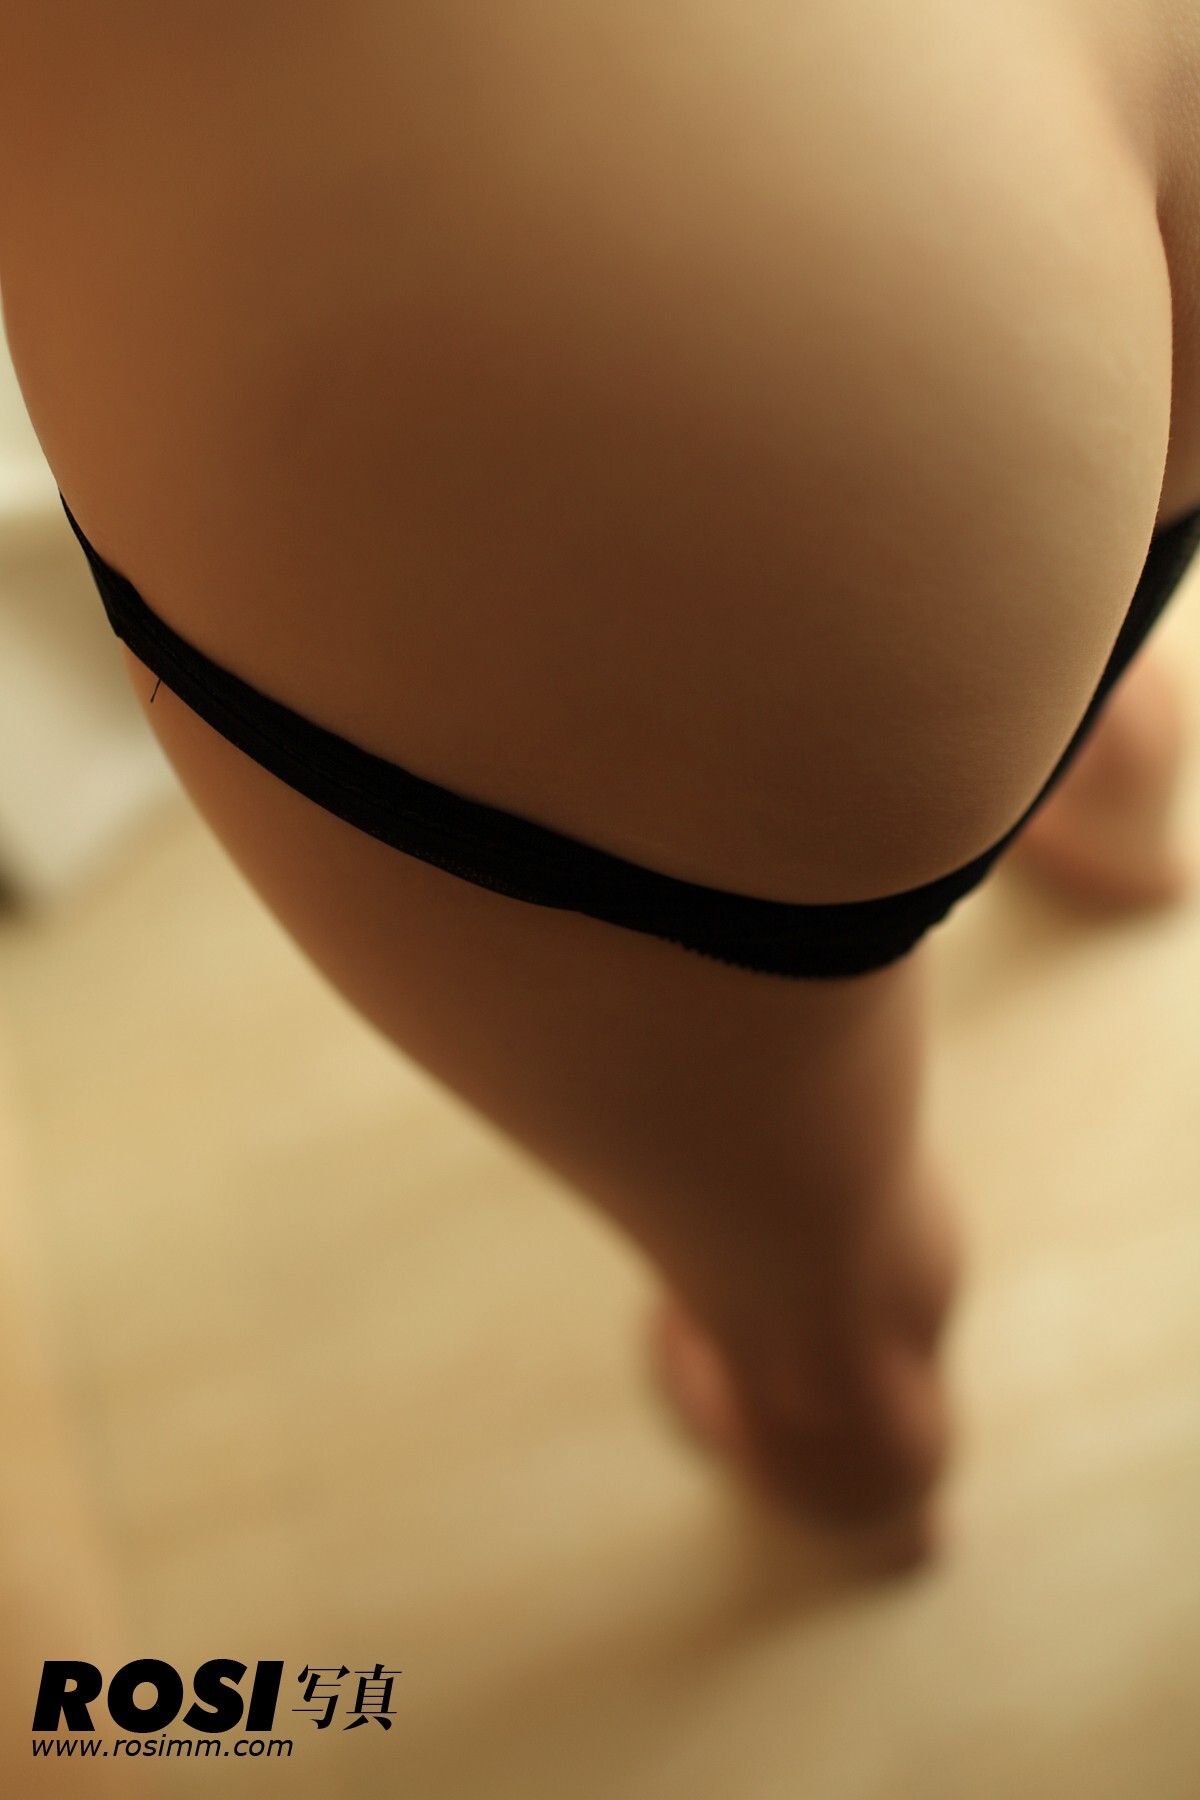 [ROSI] no.369 anonymous photo of Chengdu sexy stockings beauty